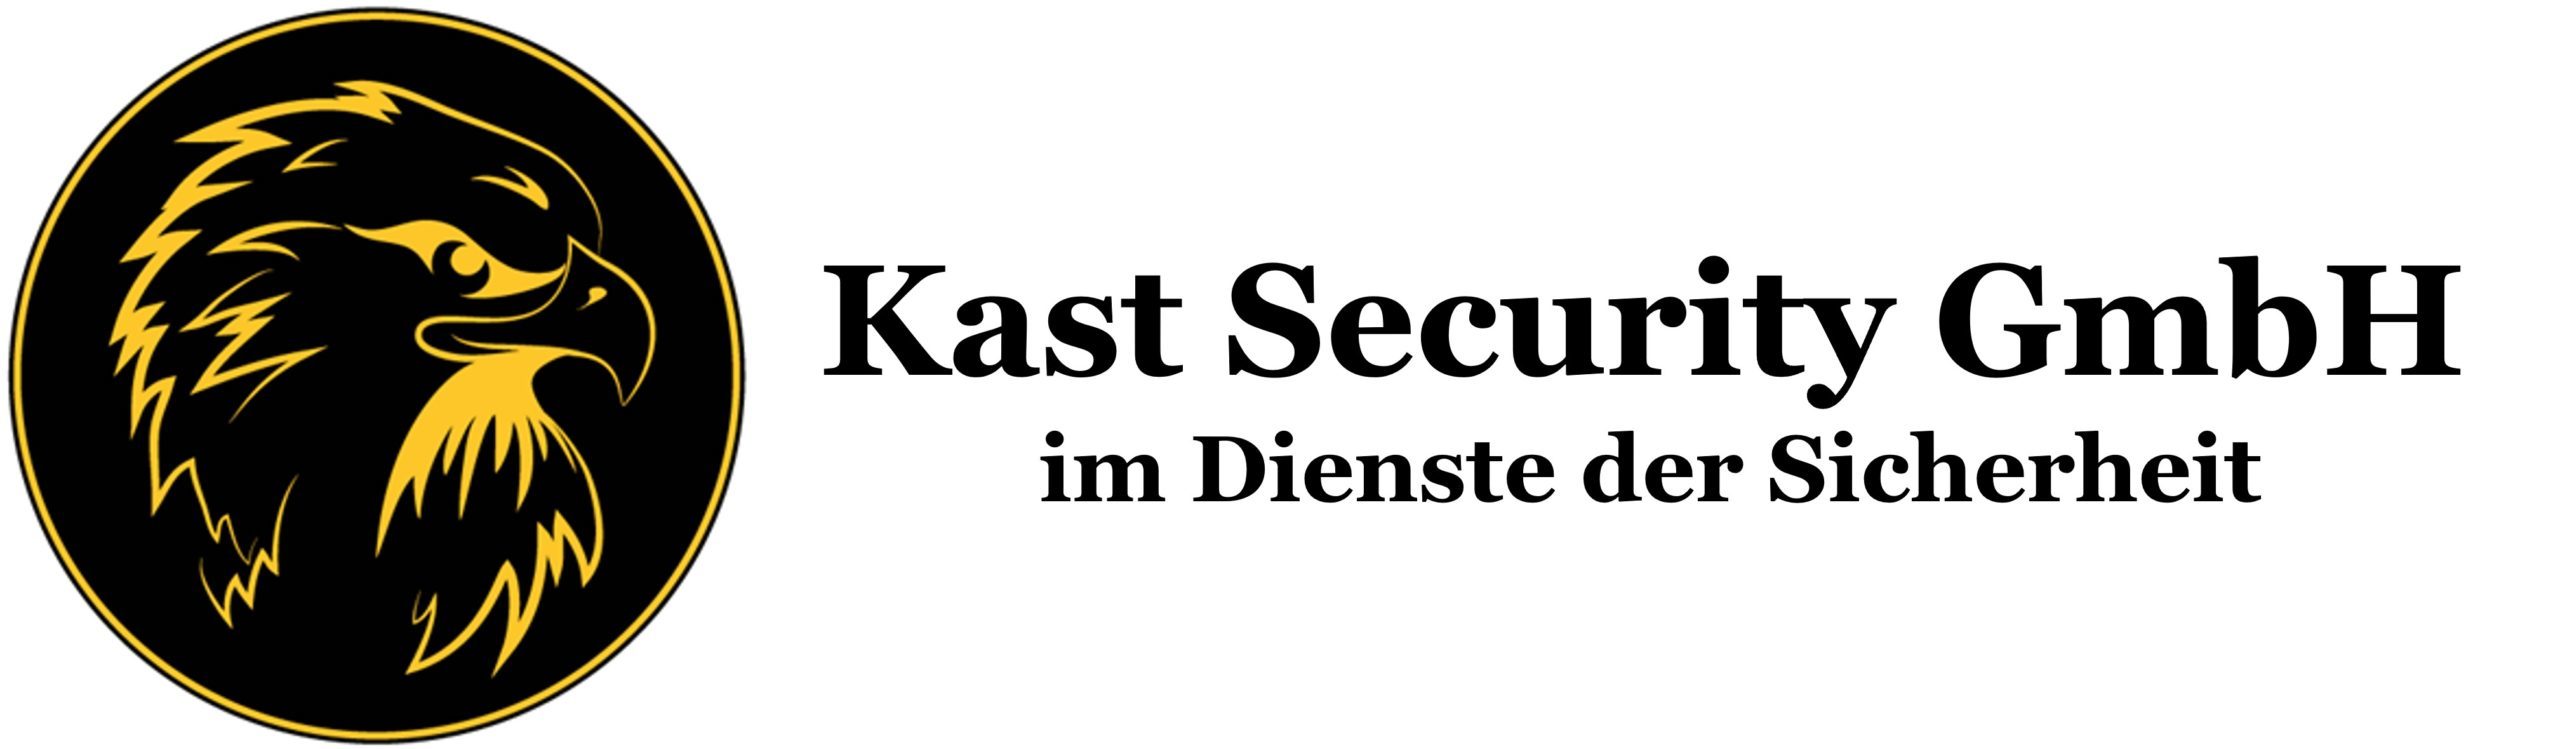 Kast Security GmbH